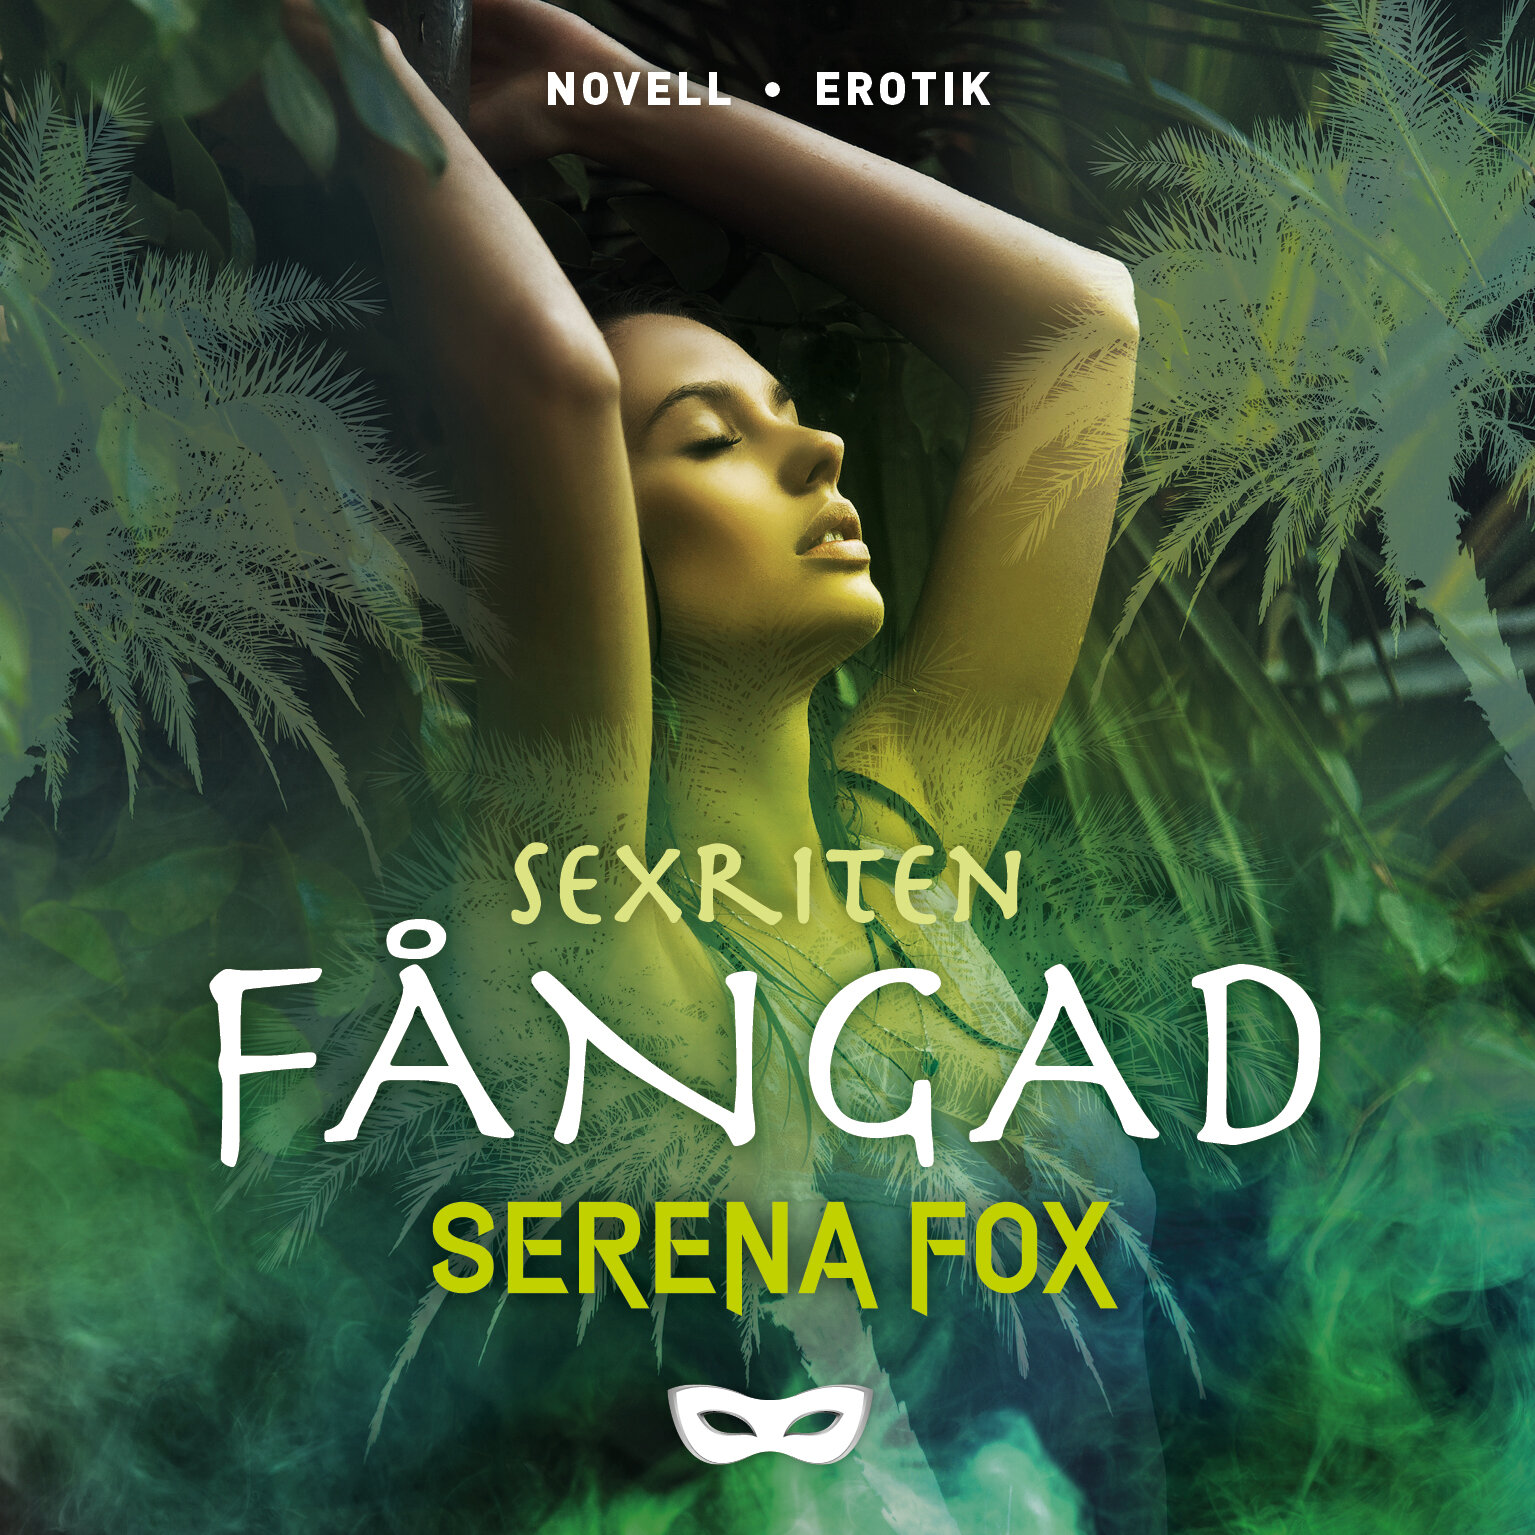 RITEN3 Serena Fox Sexriten omslag audio.jpg